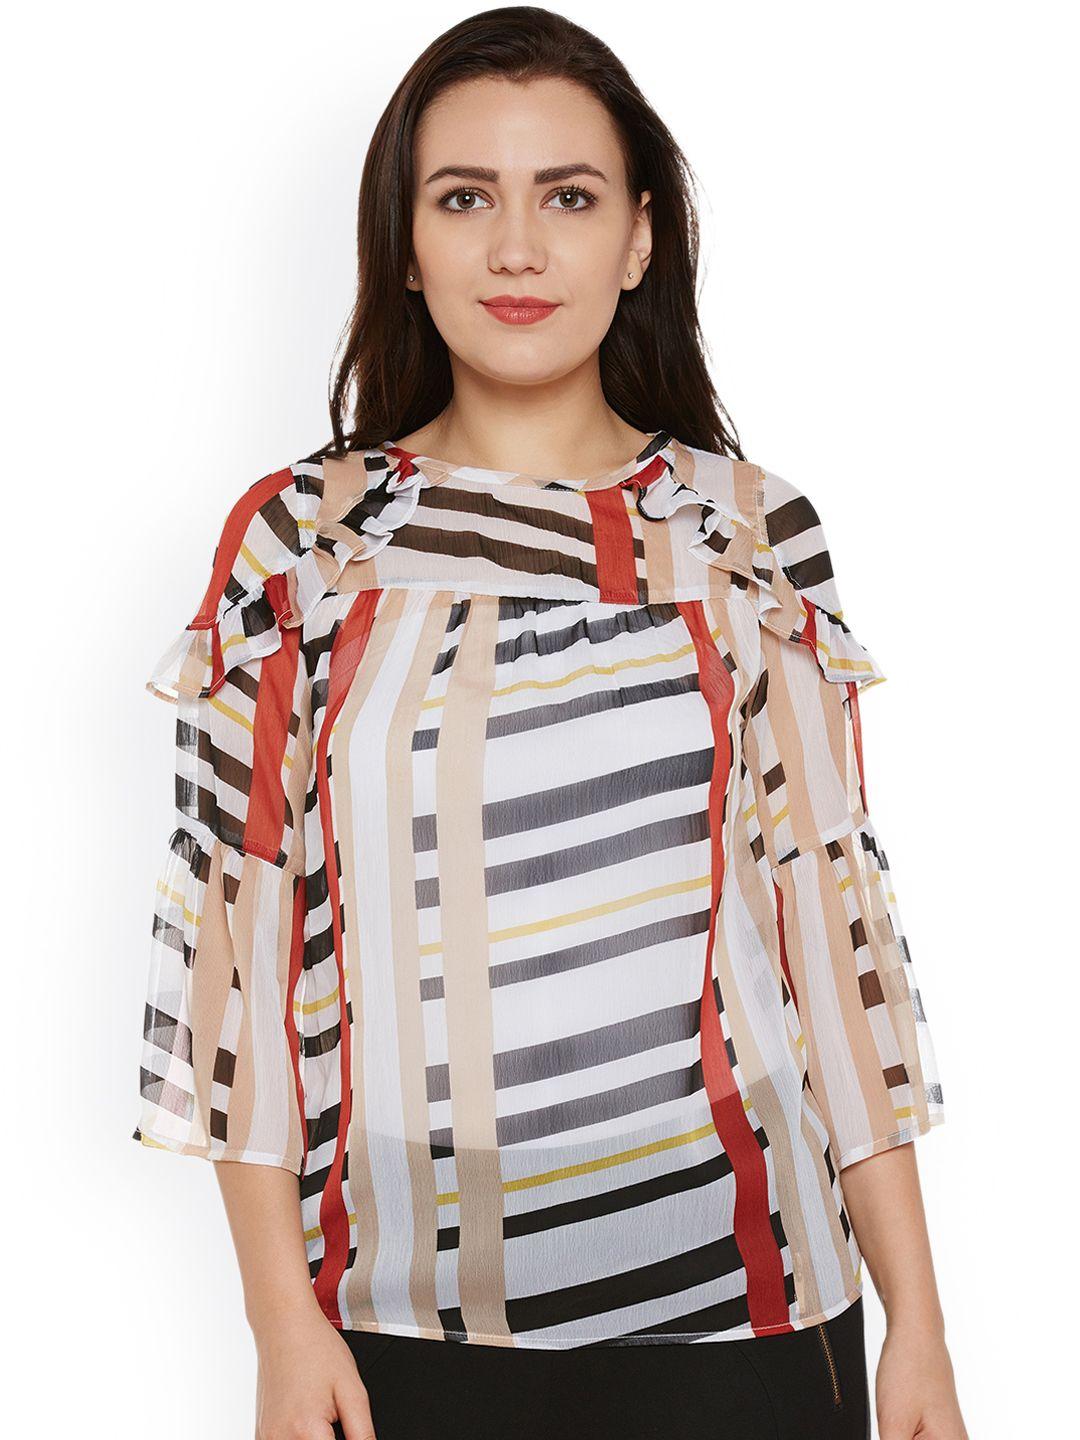 oxolloxo women multicoloured striped top